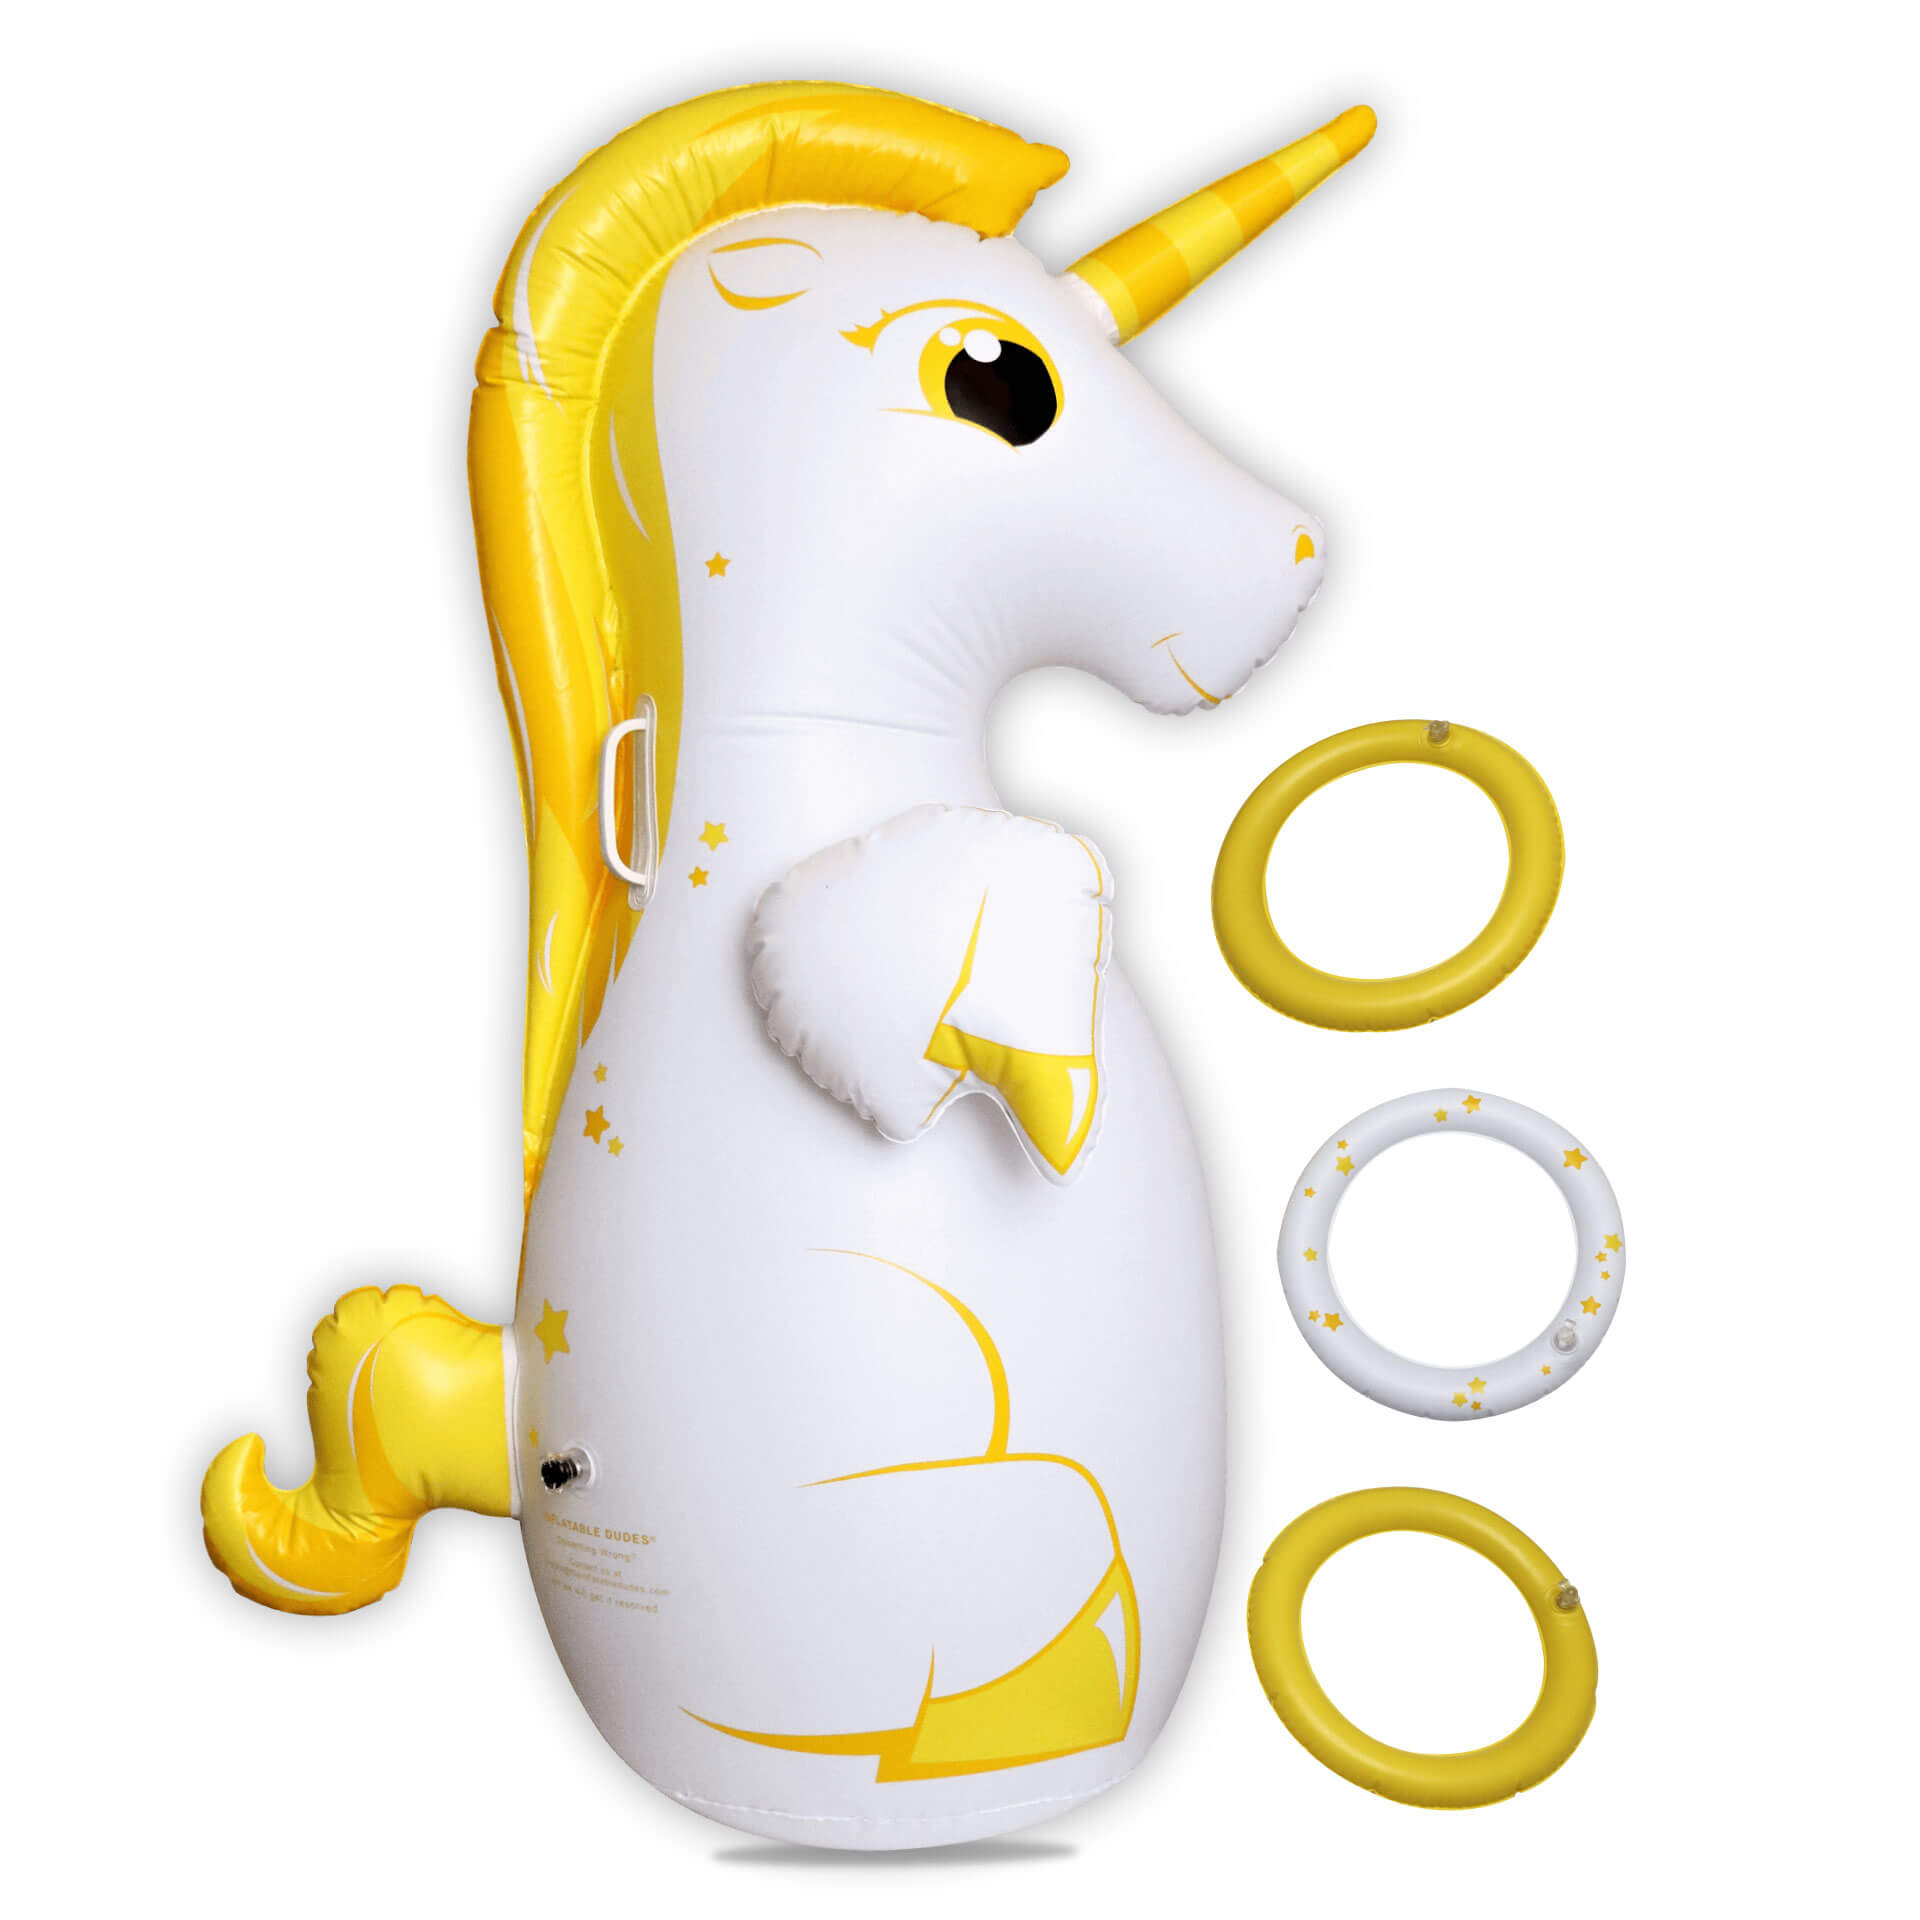 LUMINA the Golden Unicorn | 47 Inches<br>Kids Punching Bag | Bop Bag